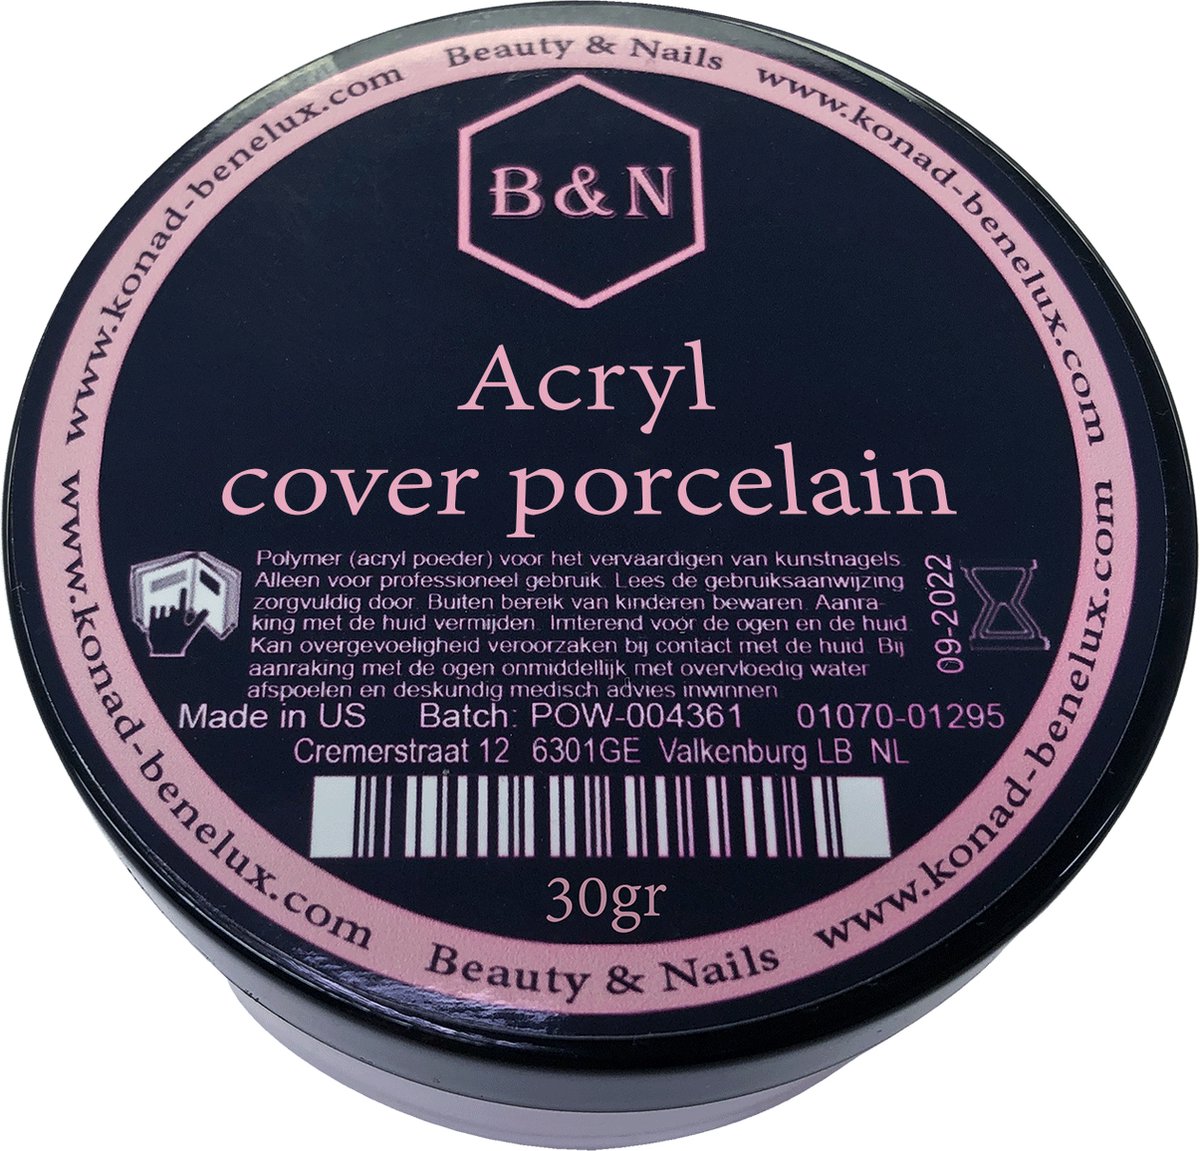 Acryl - cover porcelain - 30 gr | B&N - acrylpoeder - VEGAN - acrylpoeder